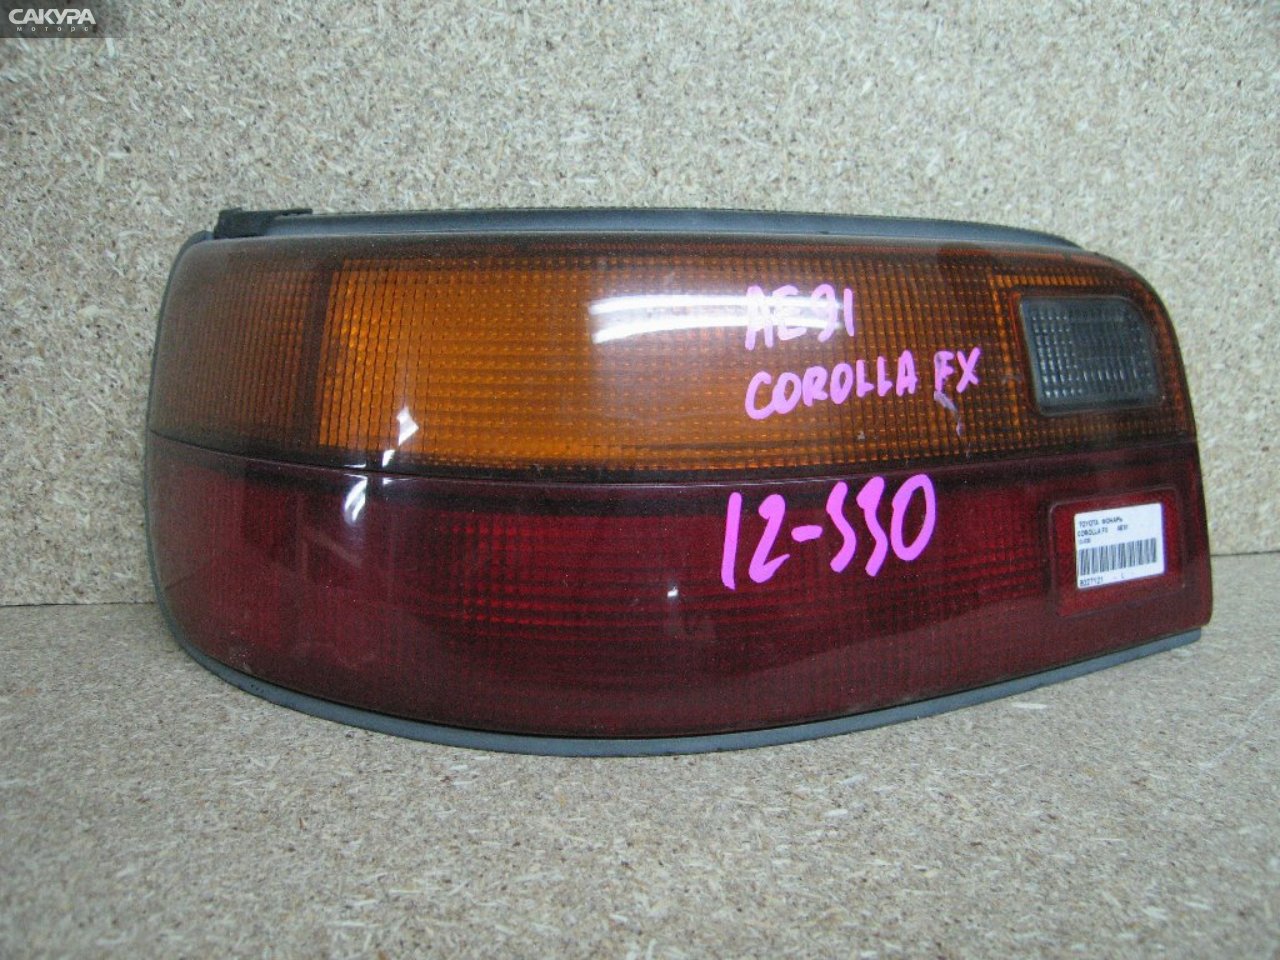 Фонарь стоп-сигнала левый Toyota Corolla FX AE91 12-330: купить в Сакура Абакан.